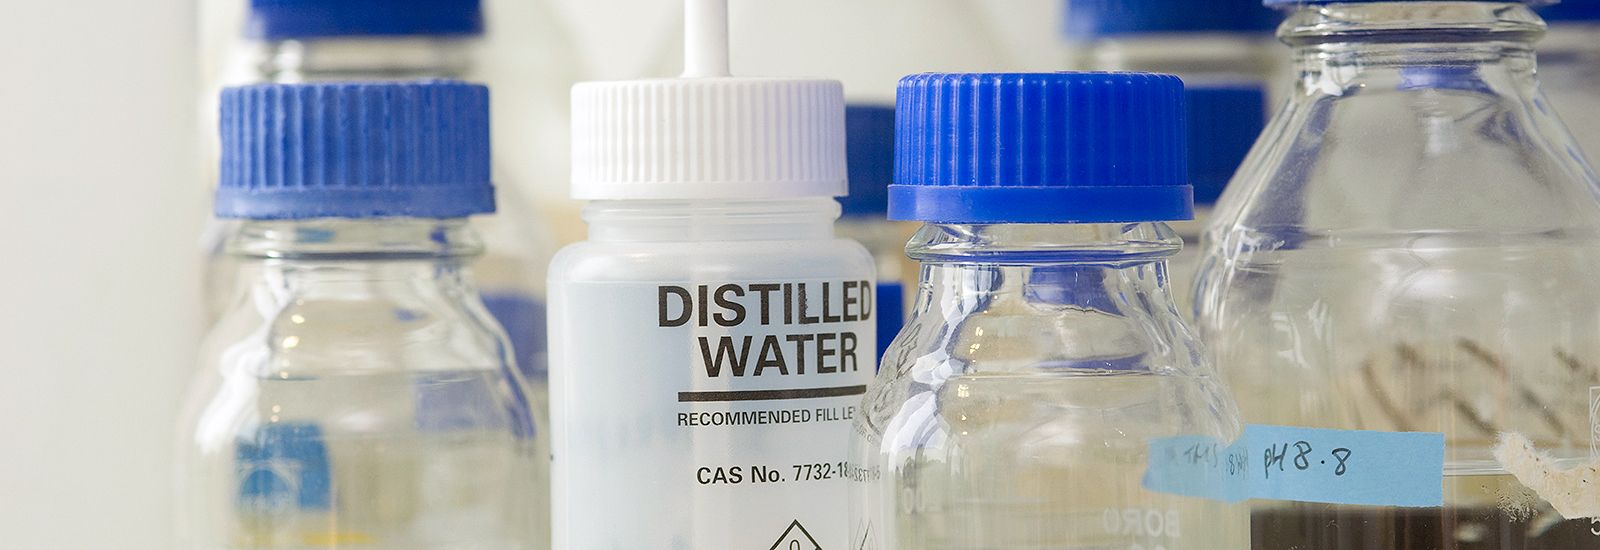 Bottles of distilled water